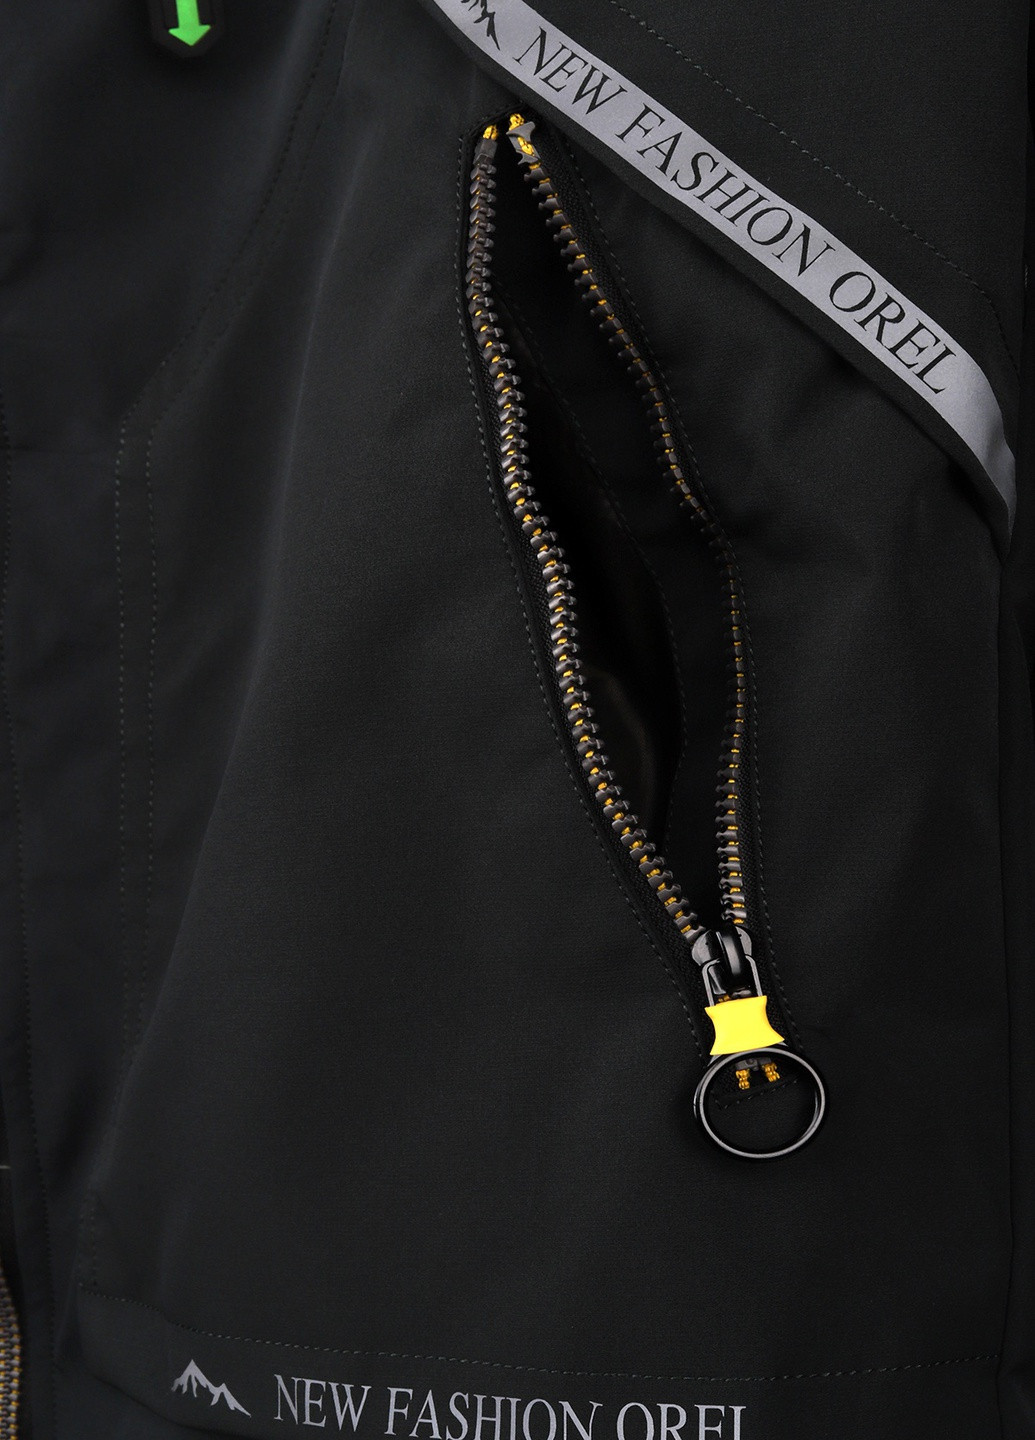 Оливковая (хаки) демисезонная куртка двухсторонняя No Brand